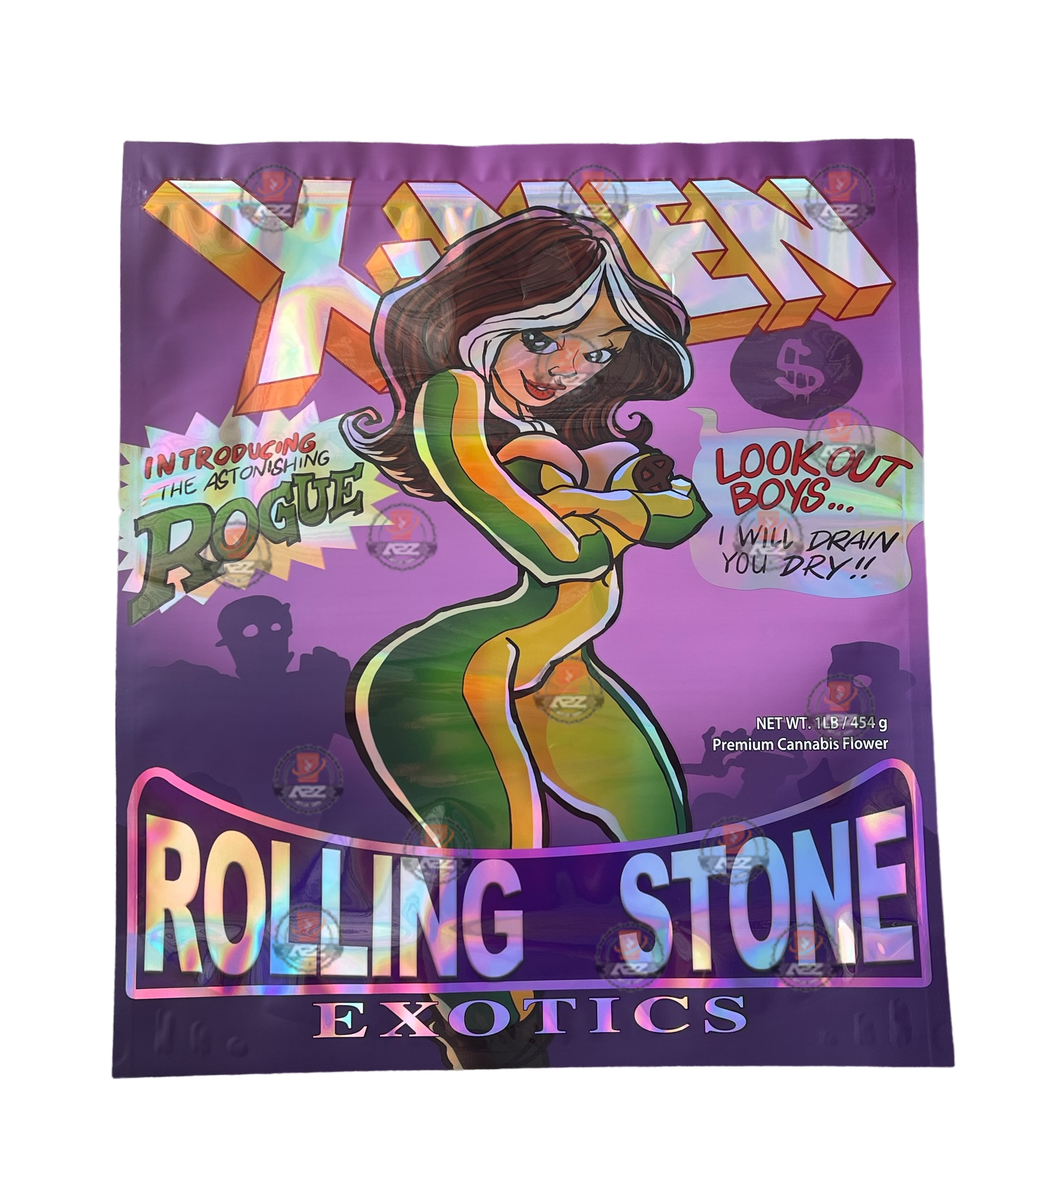 X-Men Mylar Bag (Large) 1 LBS - 16OZ (454g) Pound Bag Rolling Stone